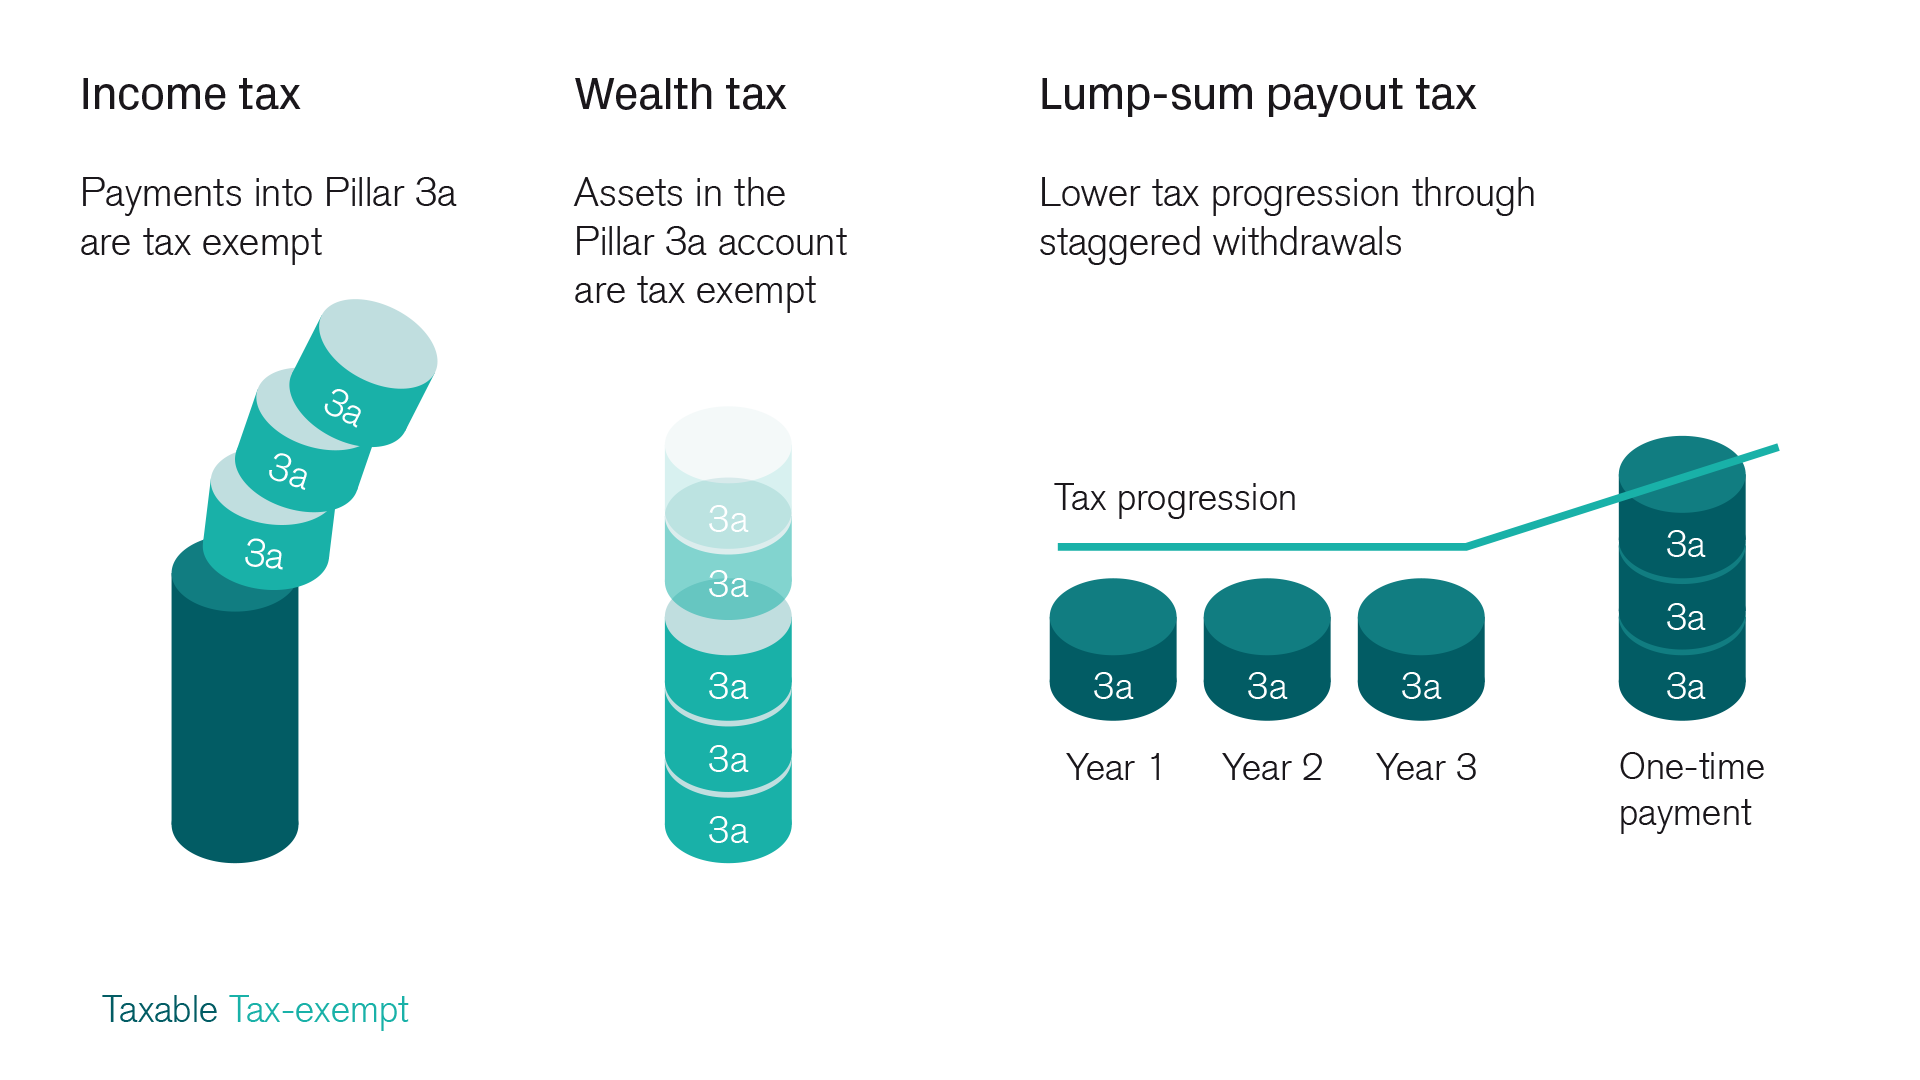 Pillar 3a tax savings: Here's how.